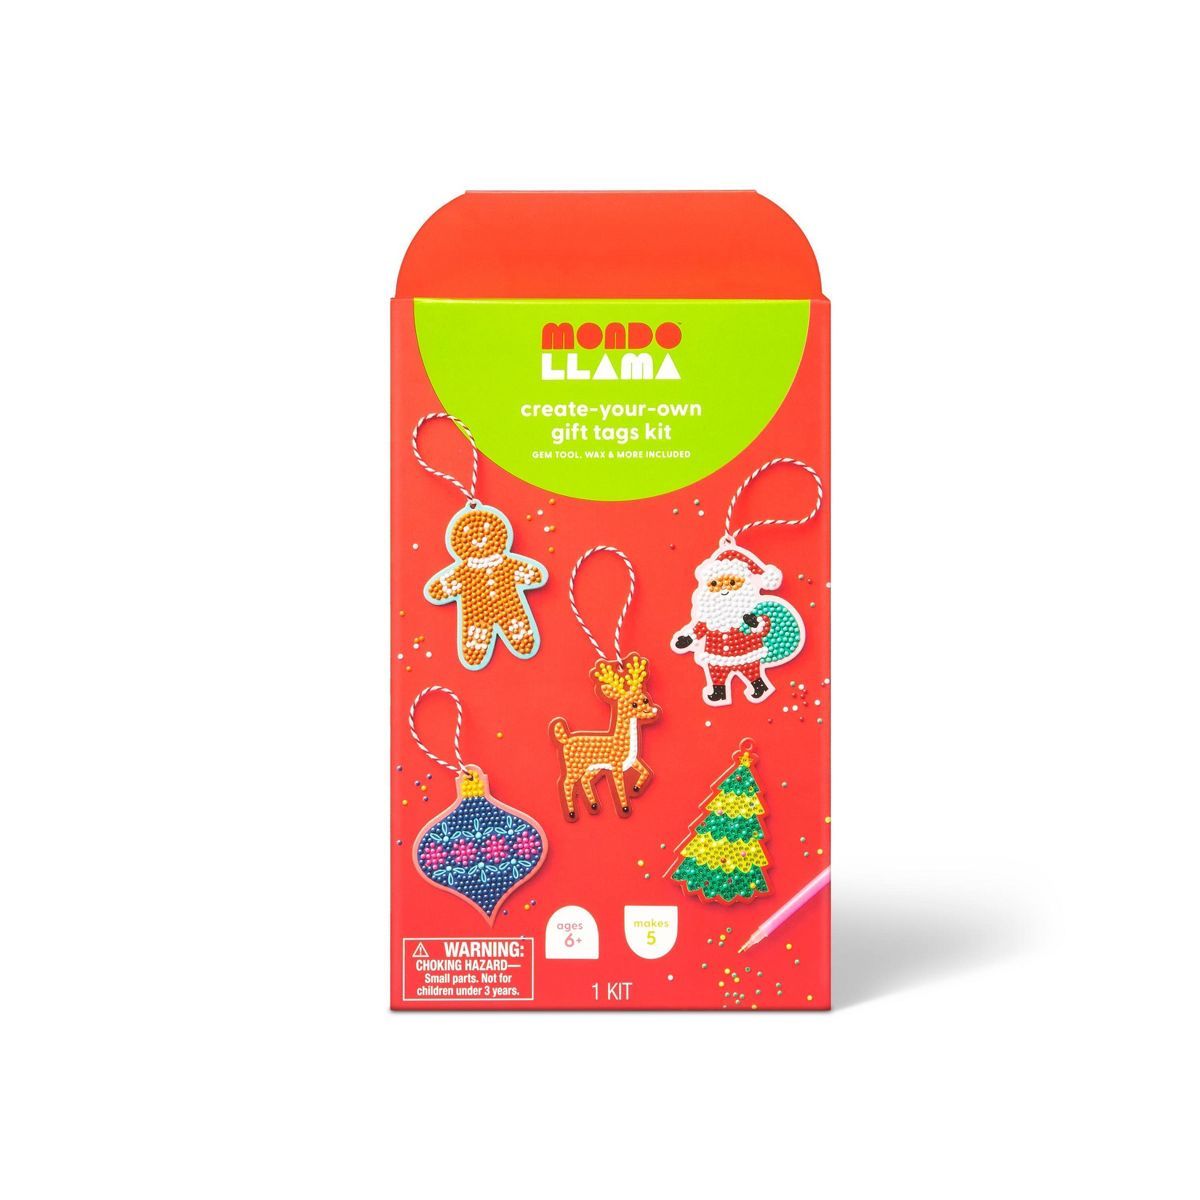 Create-Your-Own Art Gift Tags Kit - Mondo Llama™ | Target